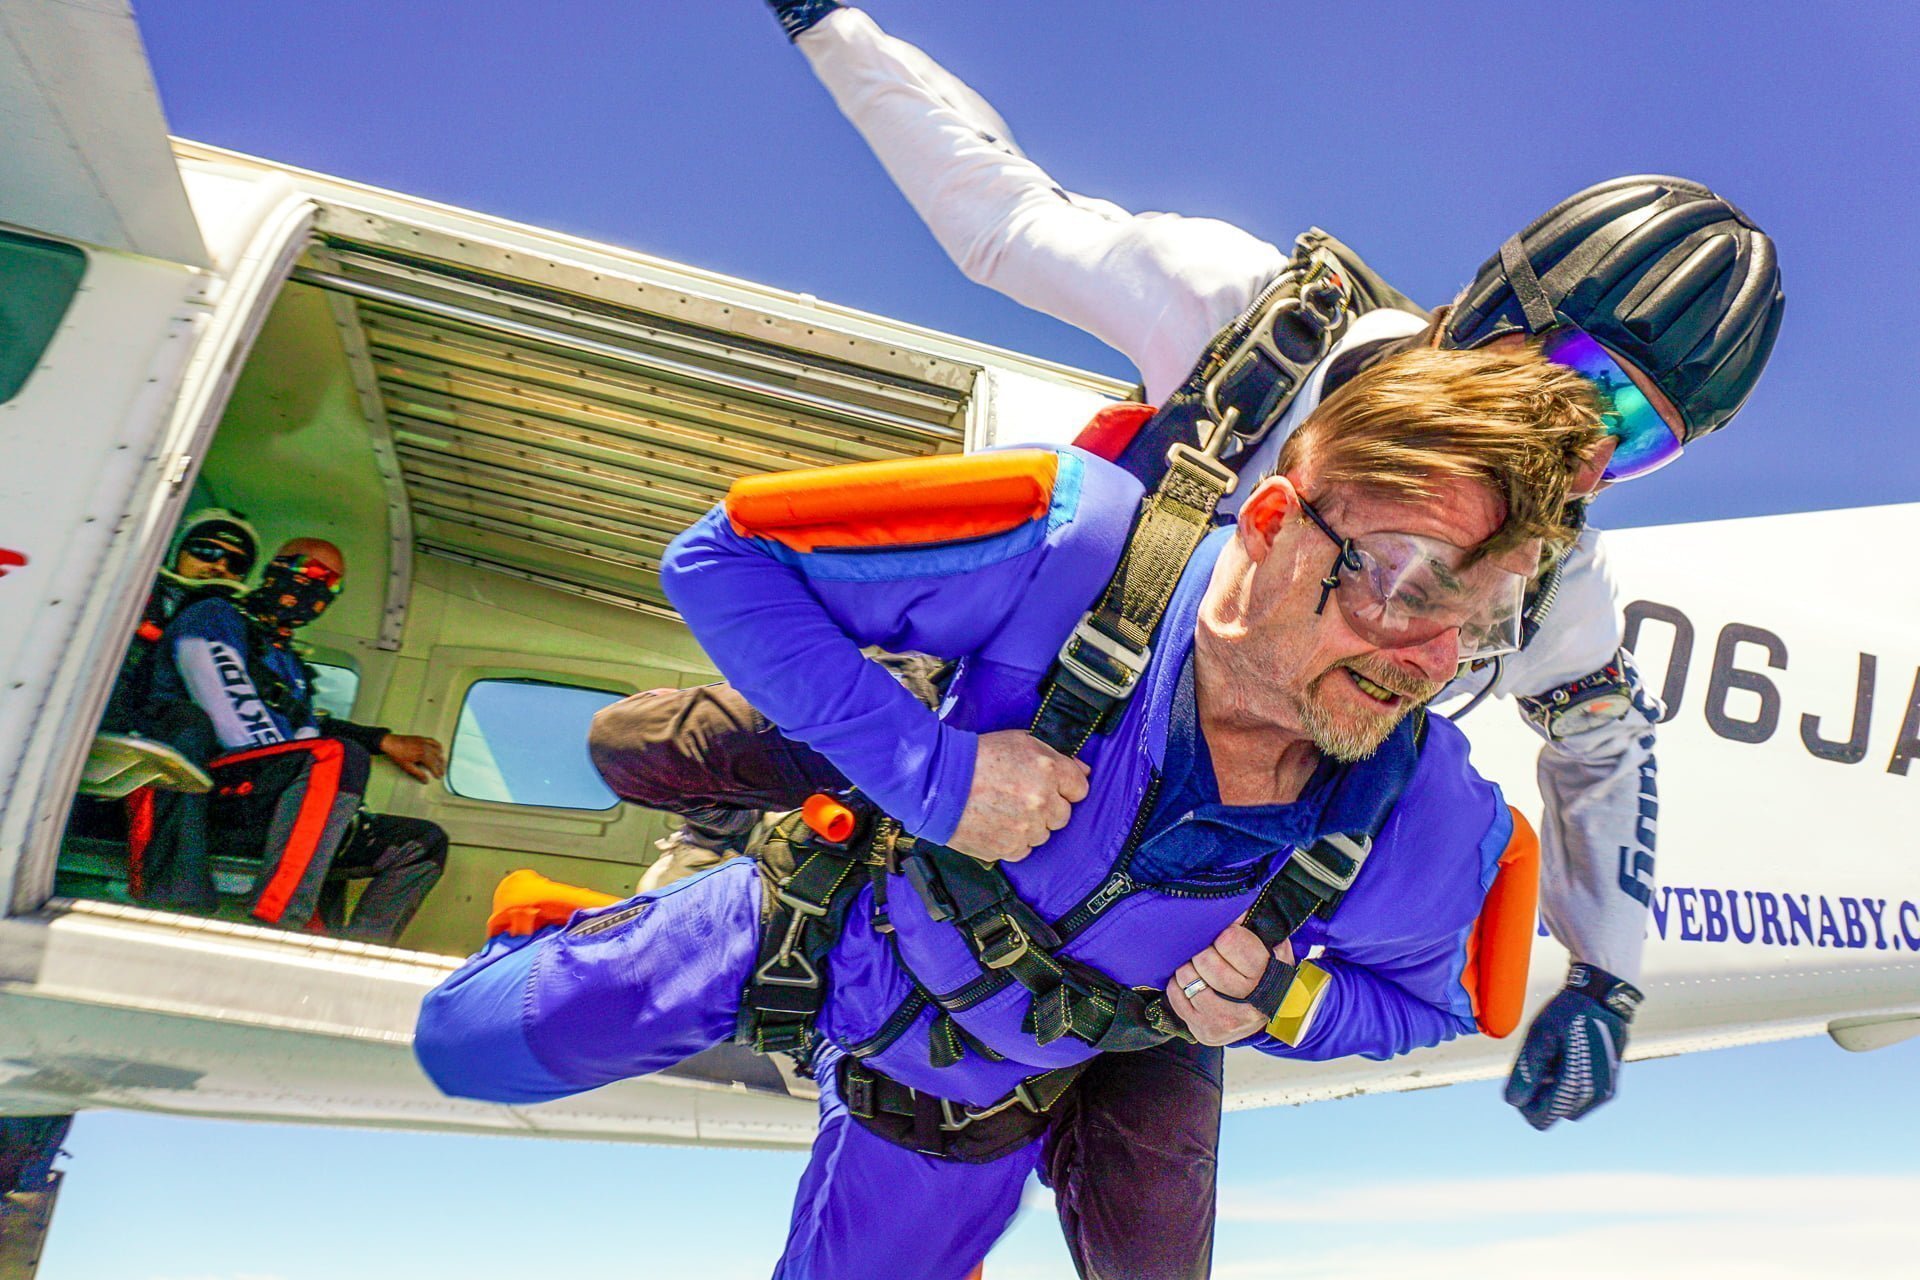 A leap of faith - skydiving